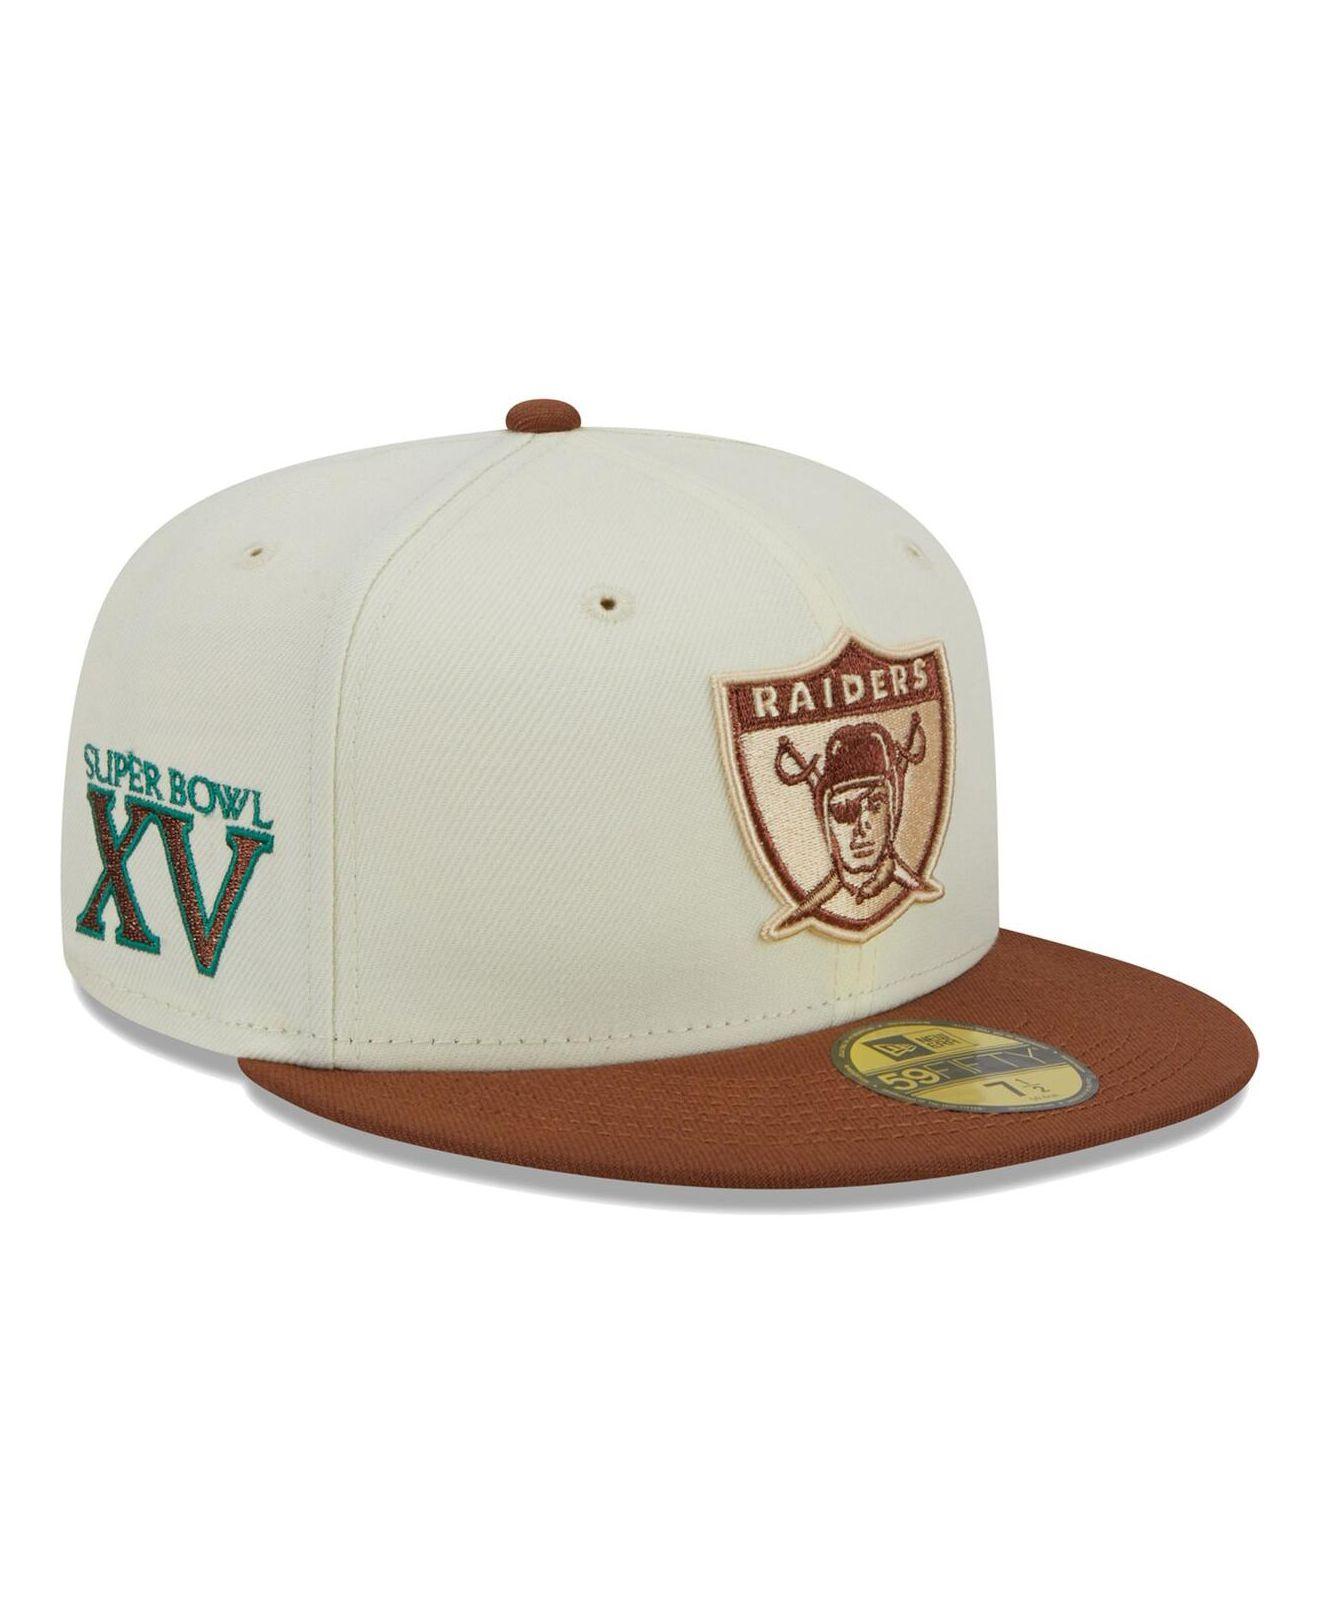 New Era Men's Black Las Vegas Raiders Logo Omaha 59FIFTY Fitted Hat